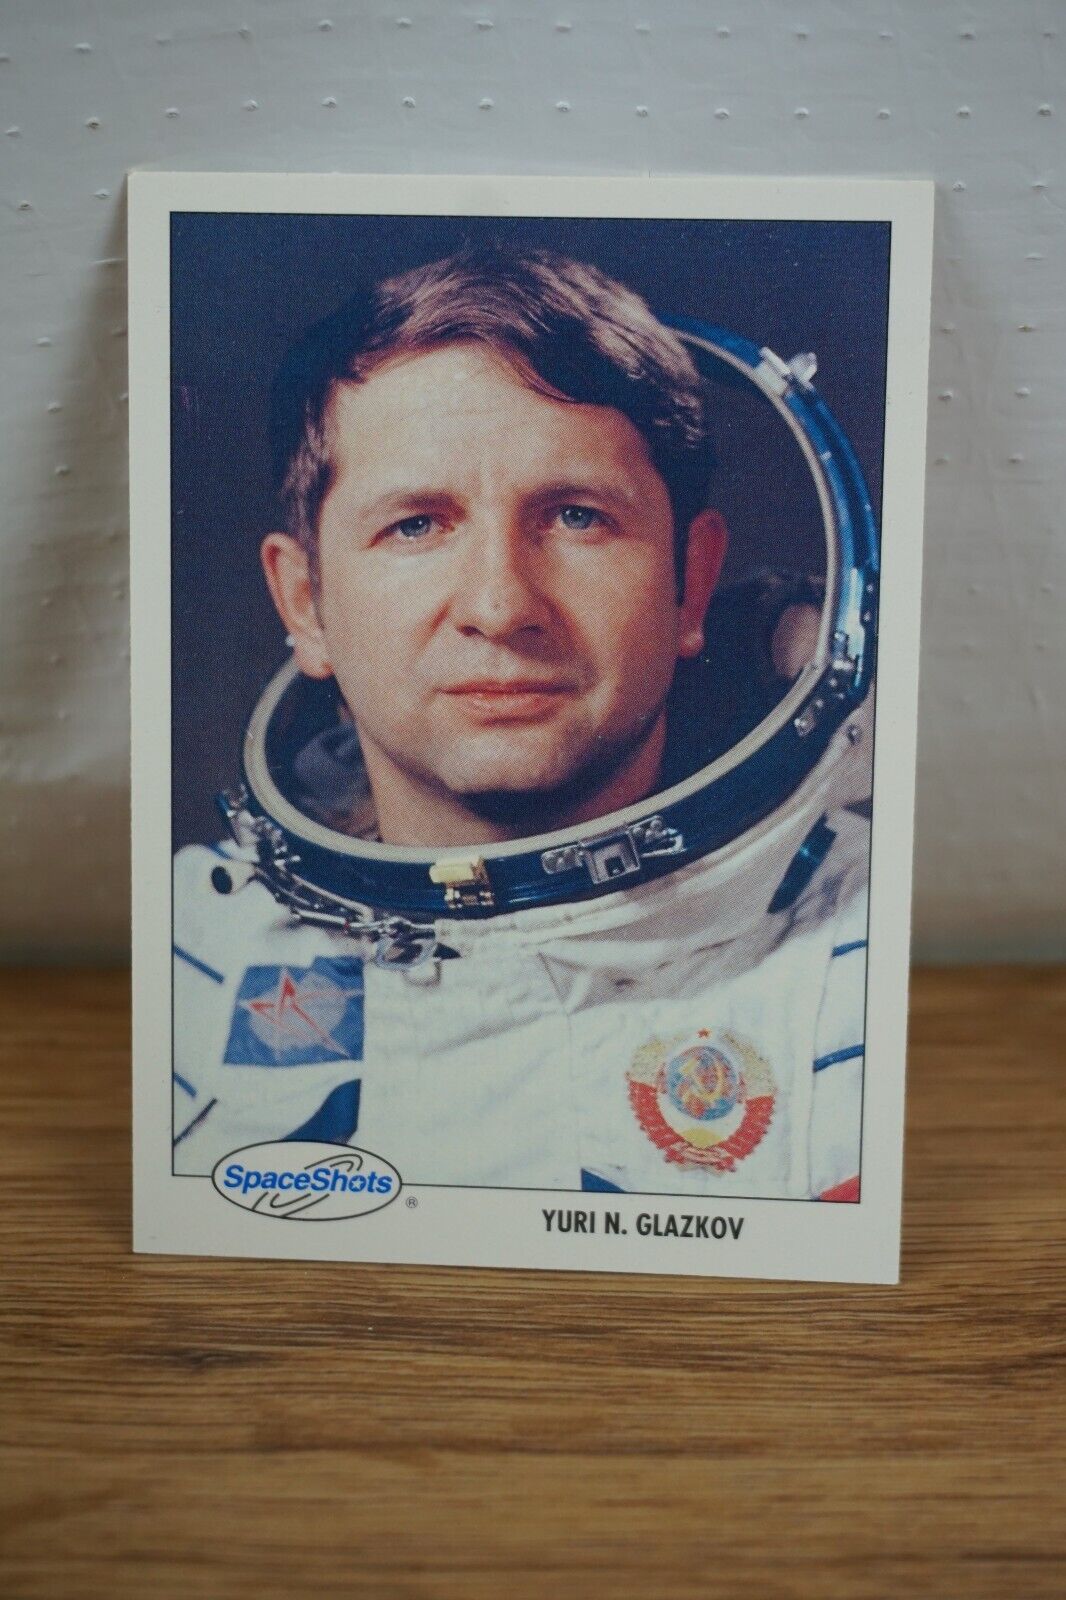 SPACESHOTS TRADING CARD 1992, YURI N. GLAZKOV